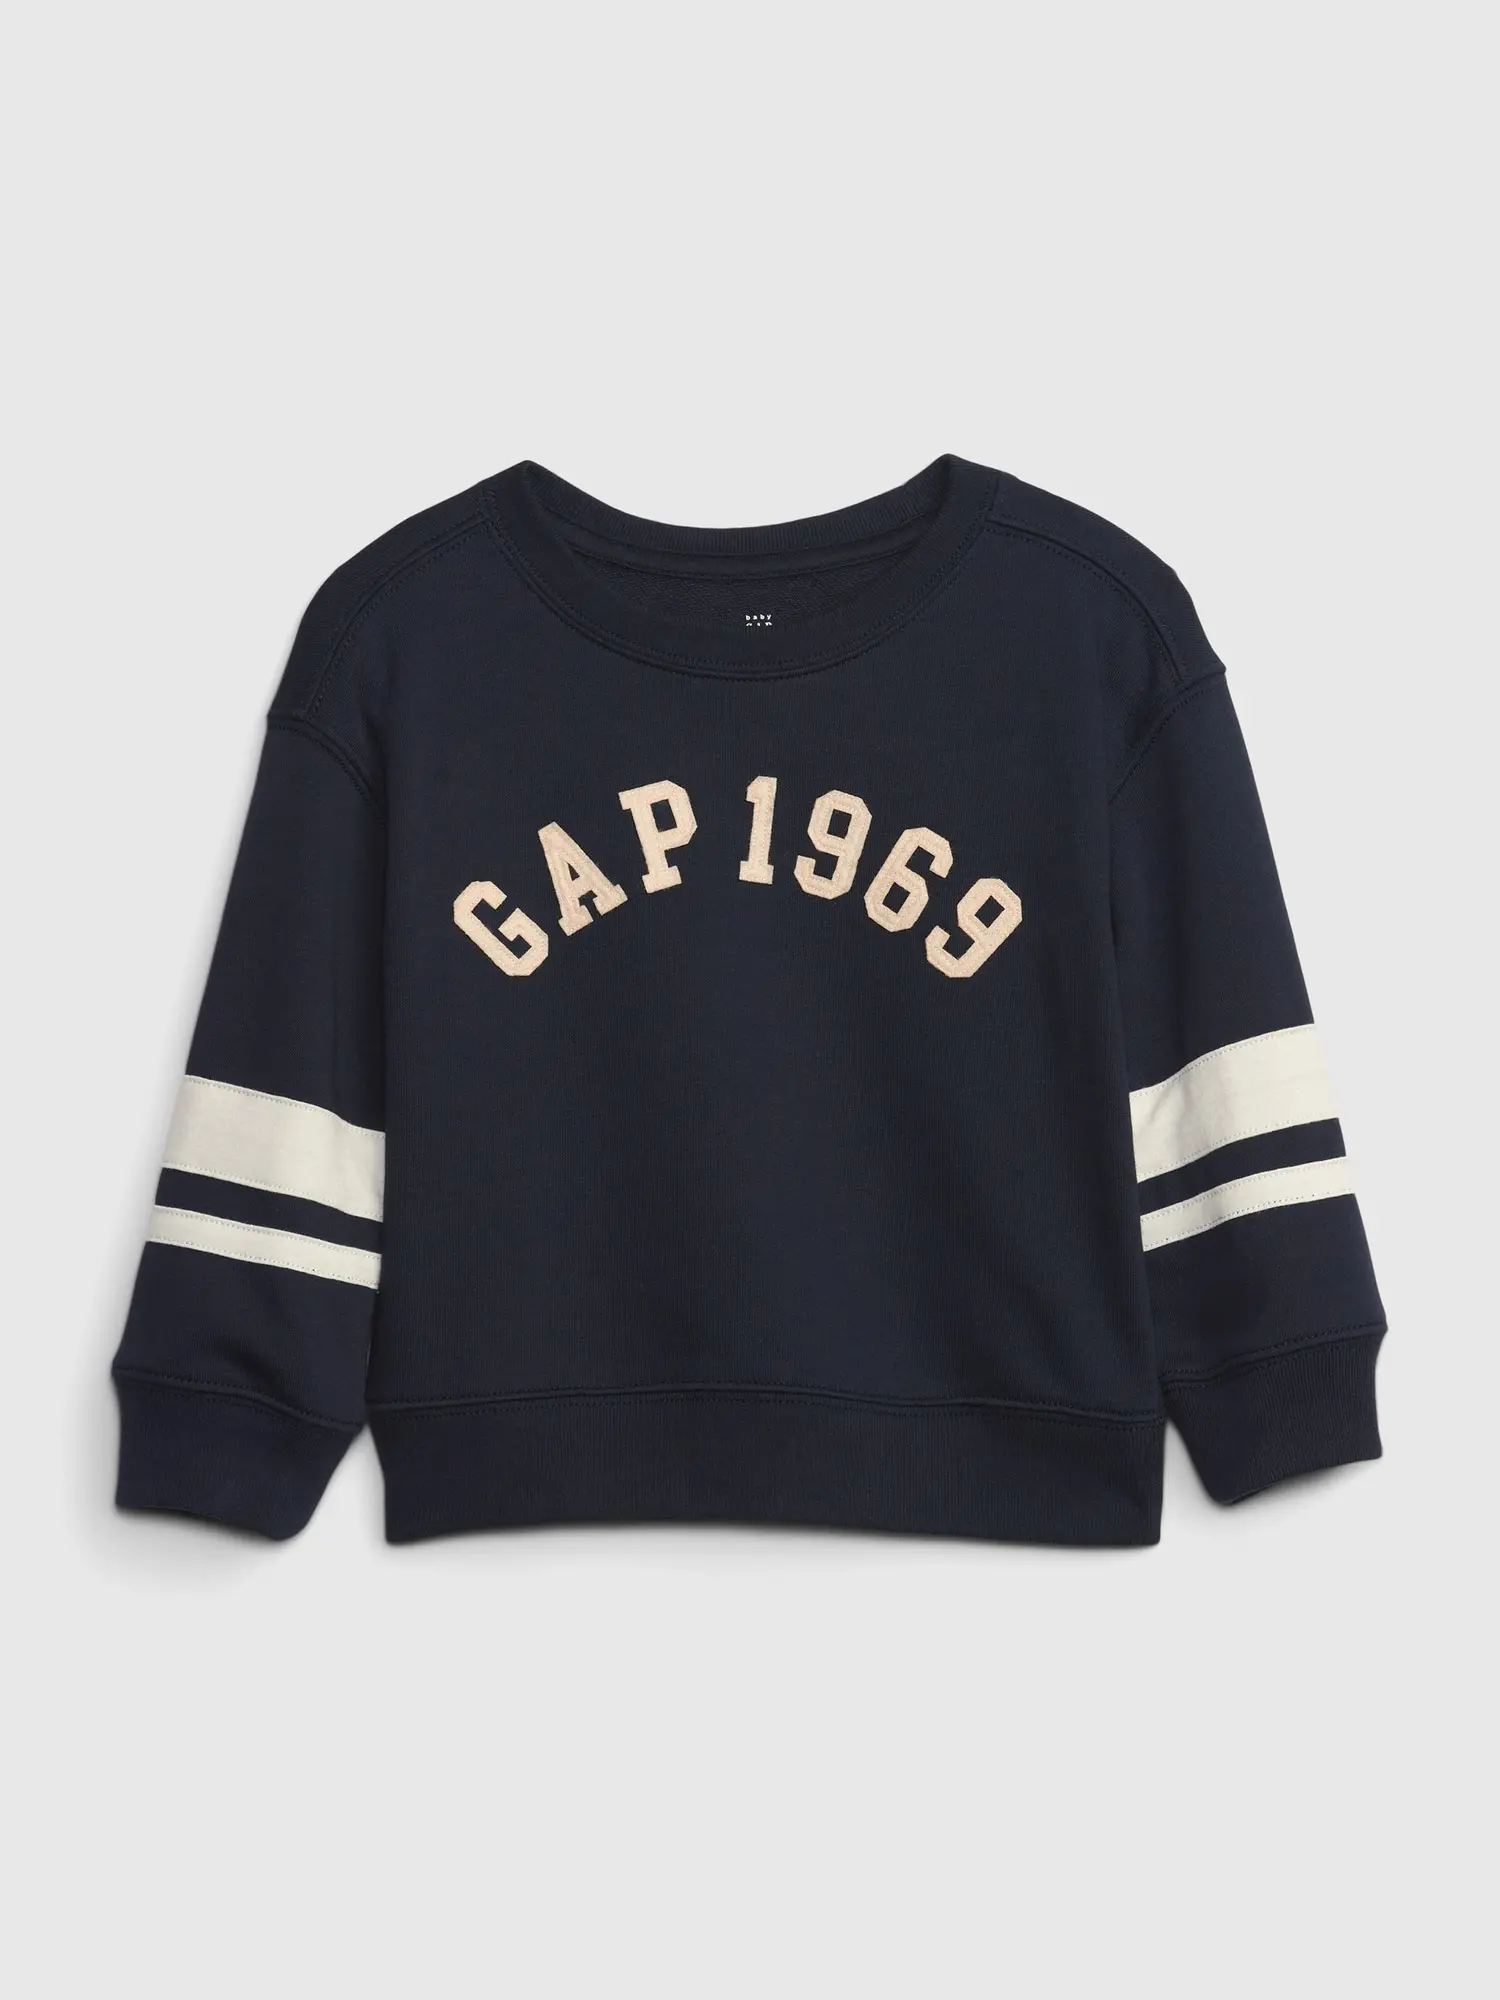 Gap Gap Logo Sweatshirt. 1